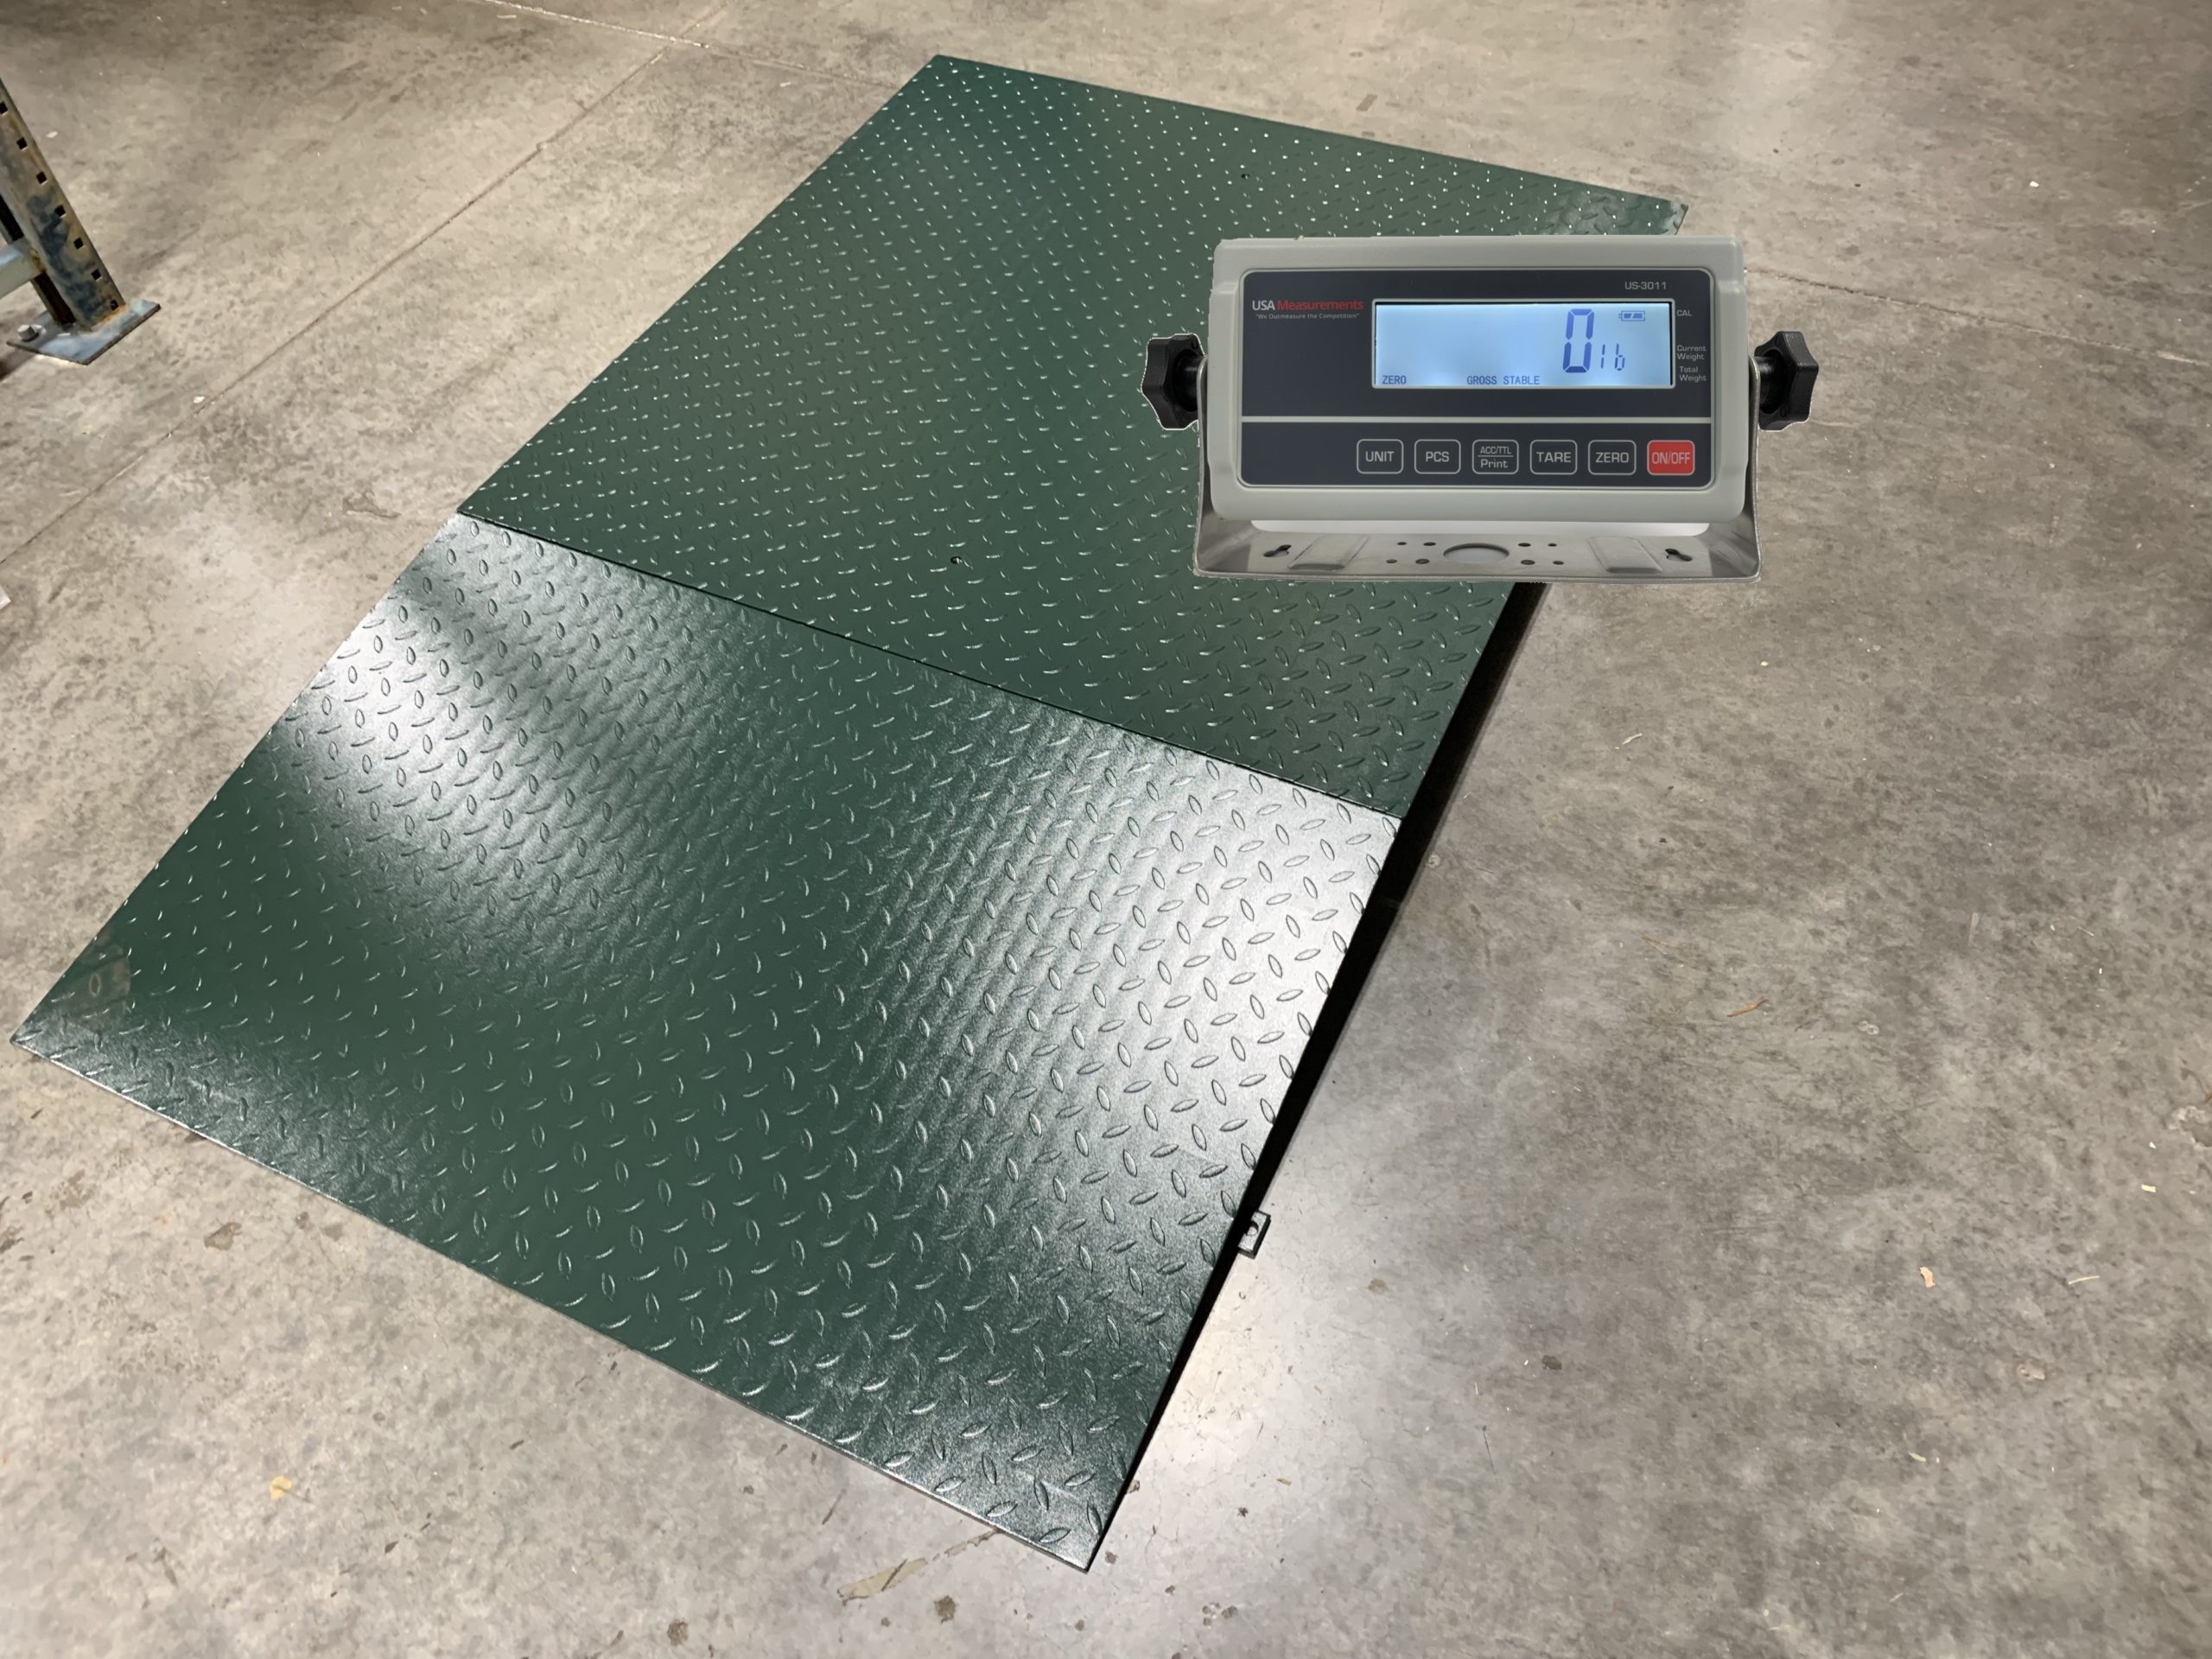 AAA Forklifts - 4x4' Diamond Treadplate Floor Scale Ramp Pallet